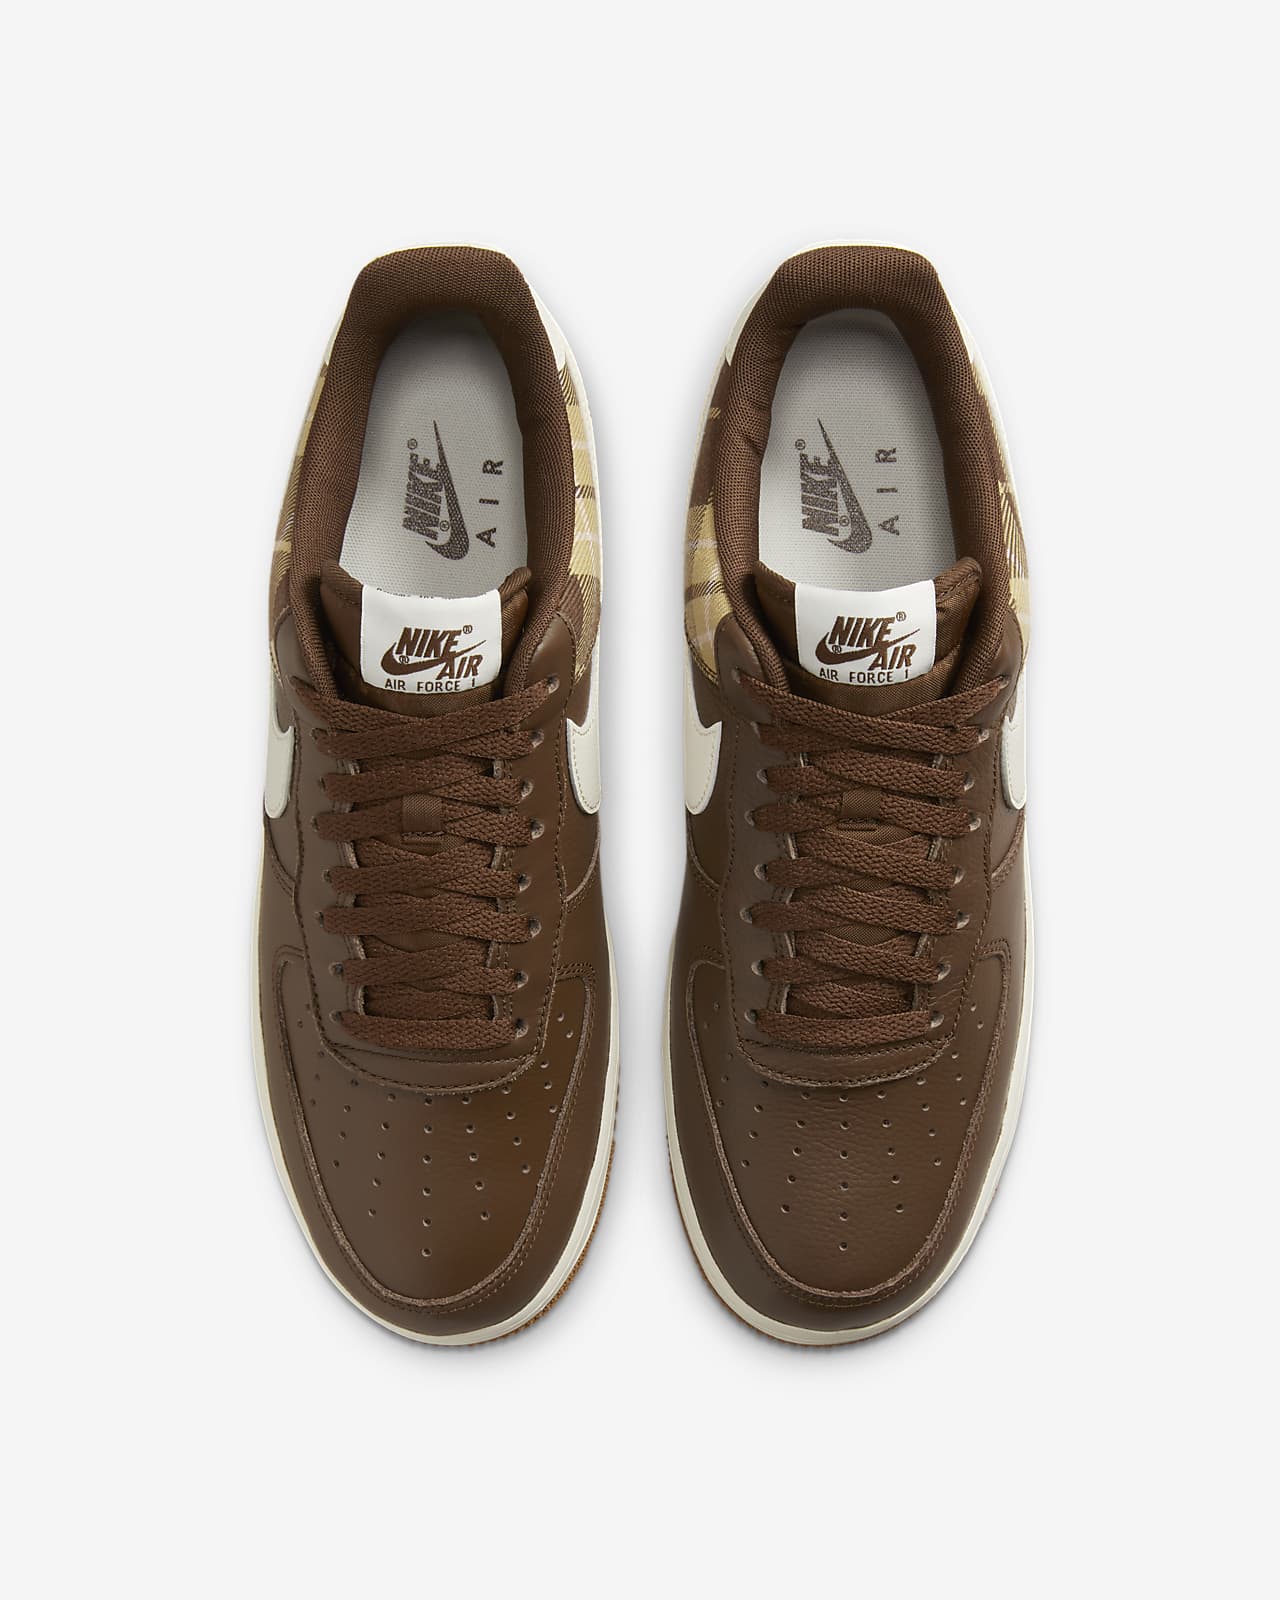 Nike Air Force 1 Mens Sneakers, Brown, Size US 7